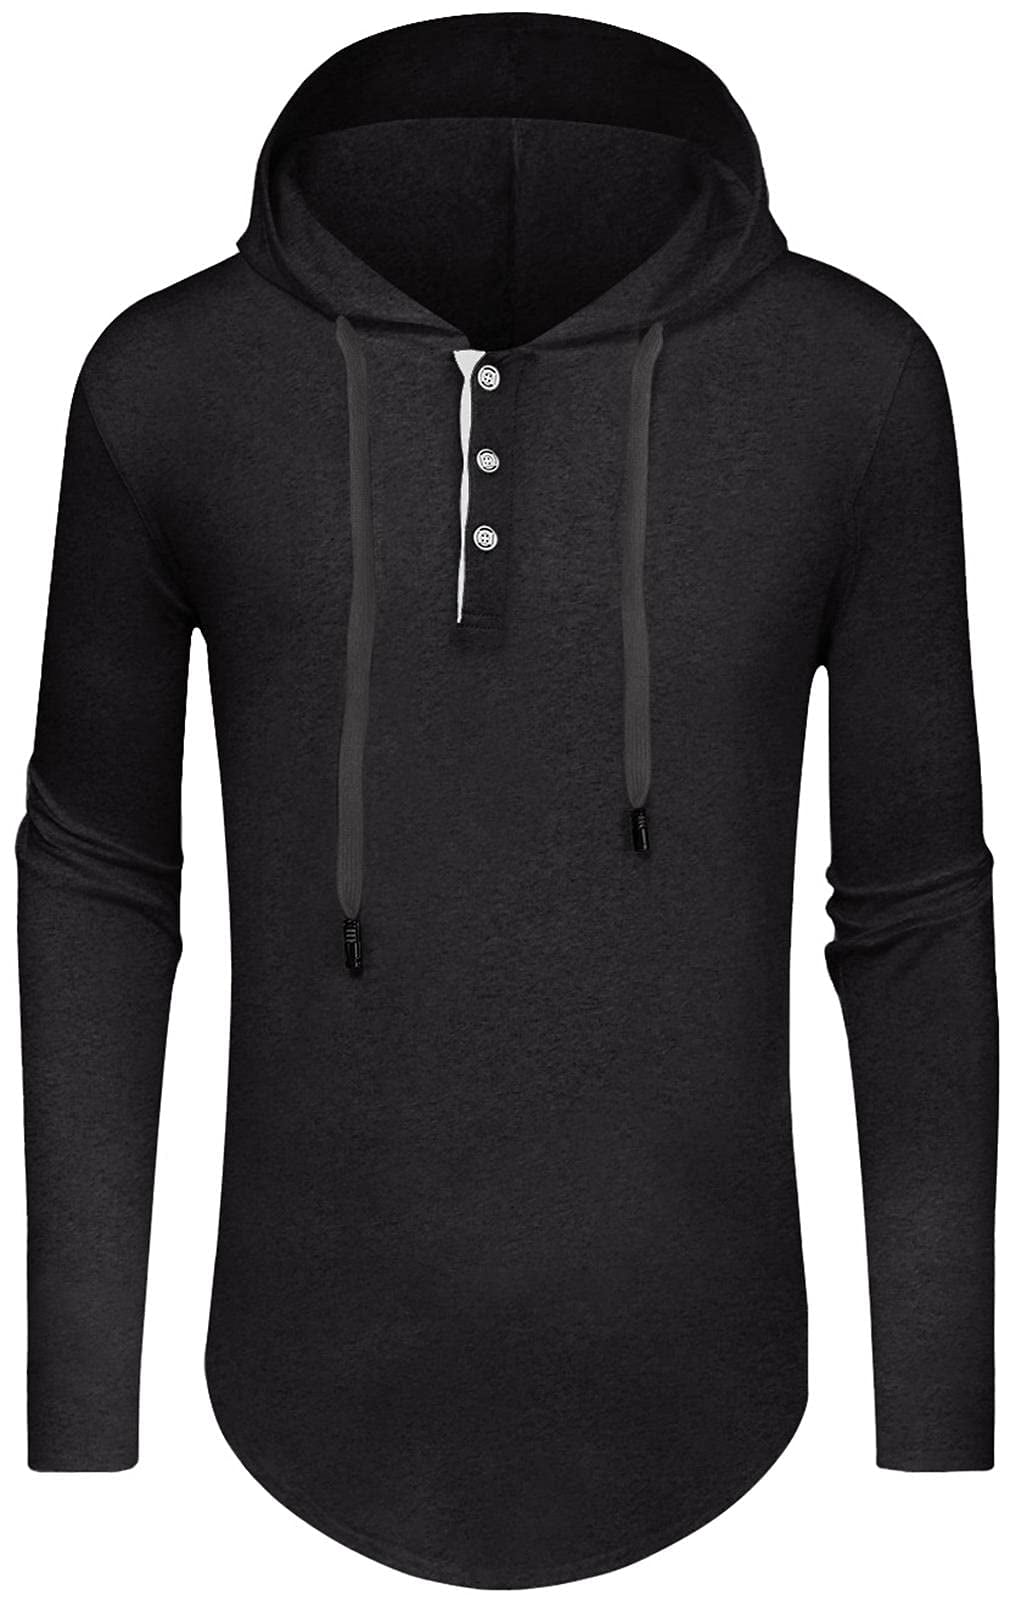 AIYINO Men's S-5X Short/Long Sleeve Fashion Athletic Hoodies Sport Sweatshirt Hip Hop Pullover